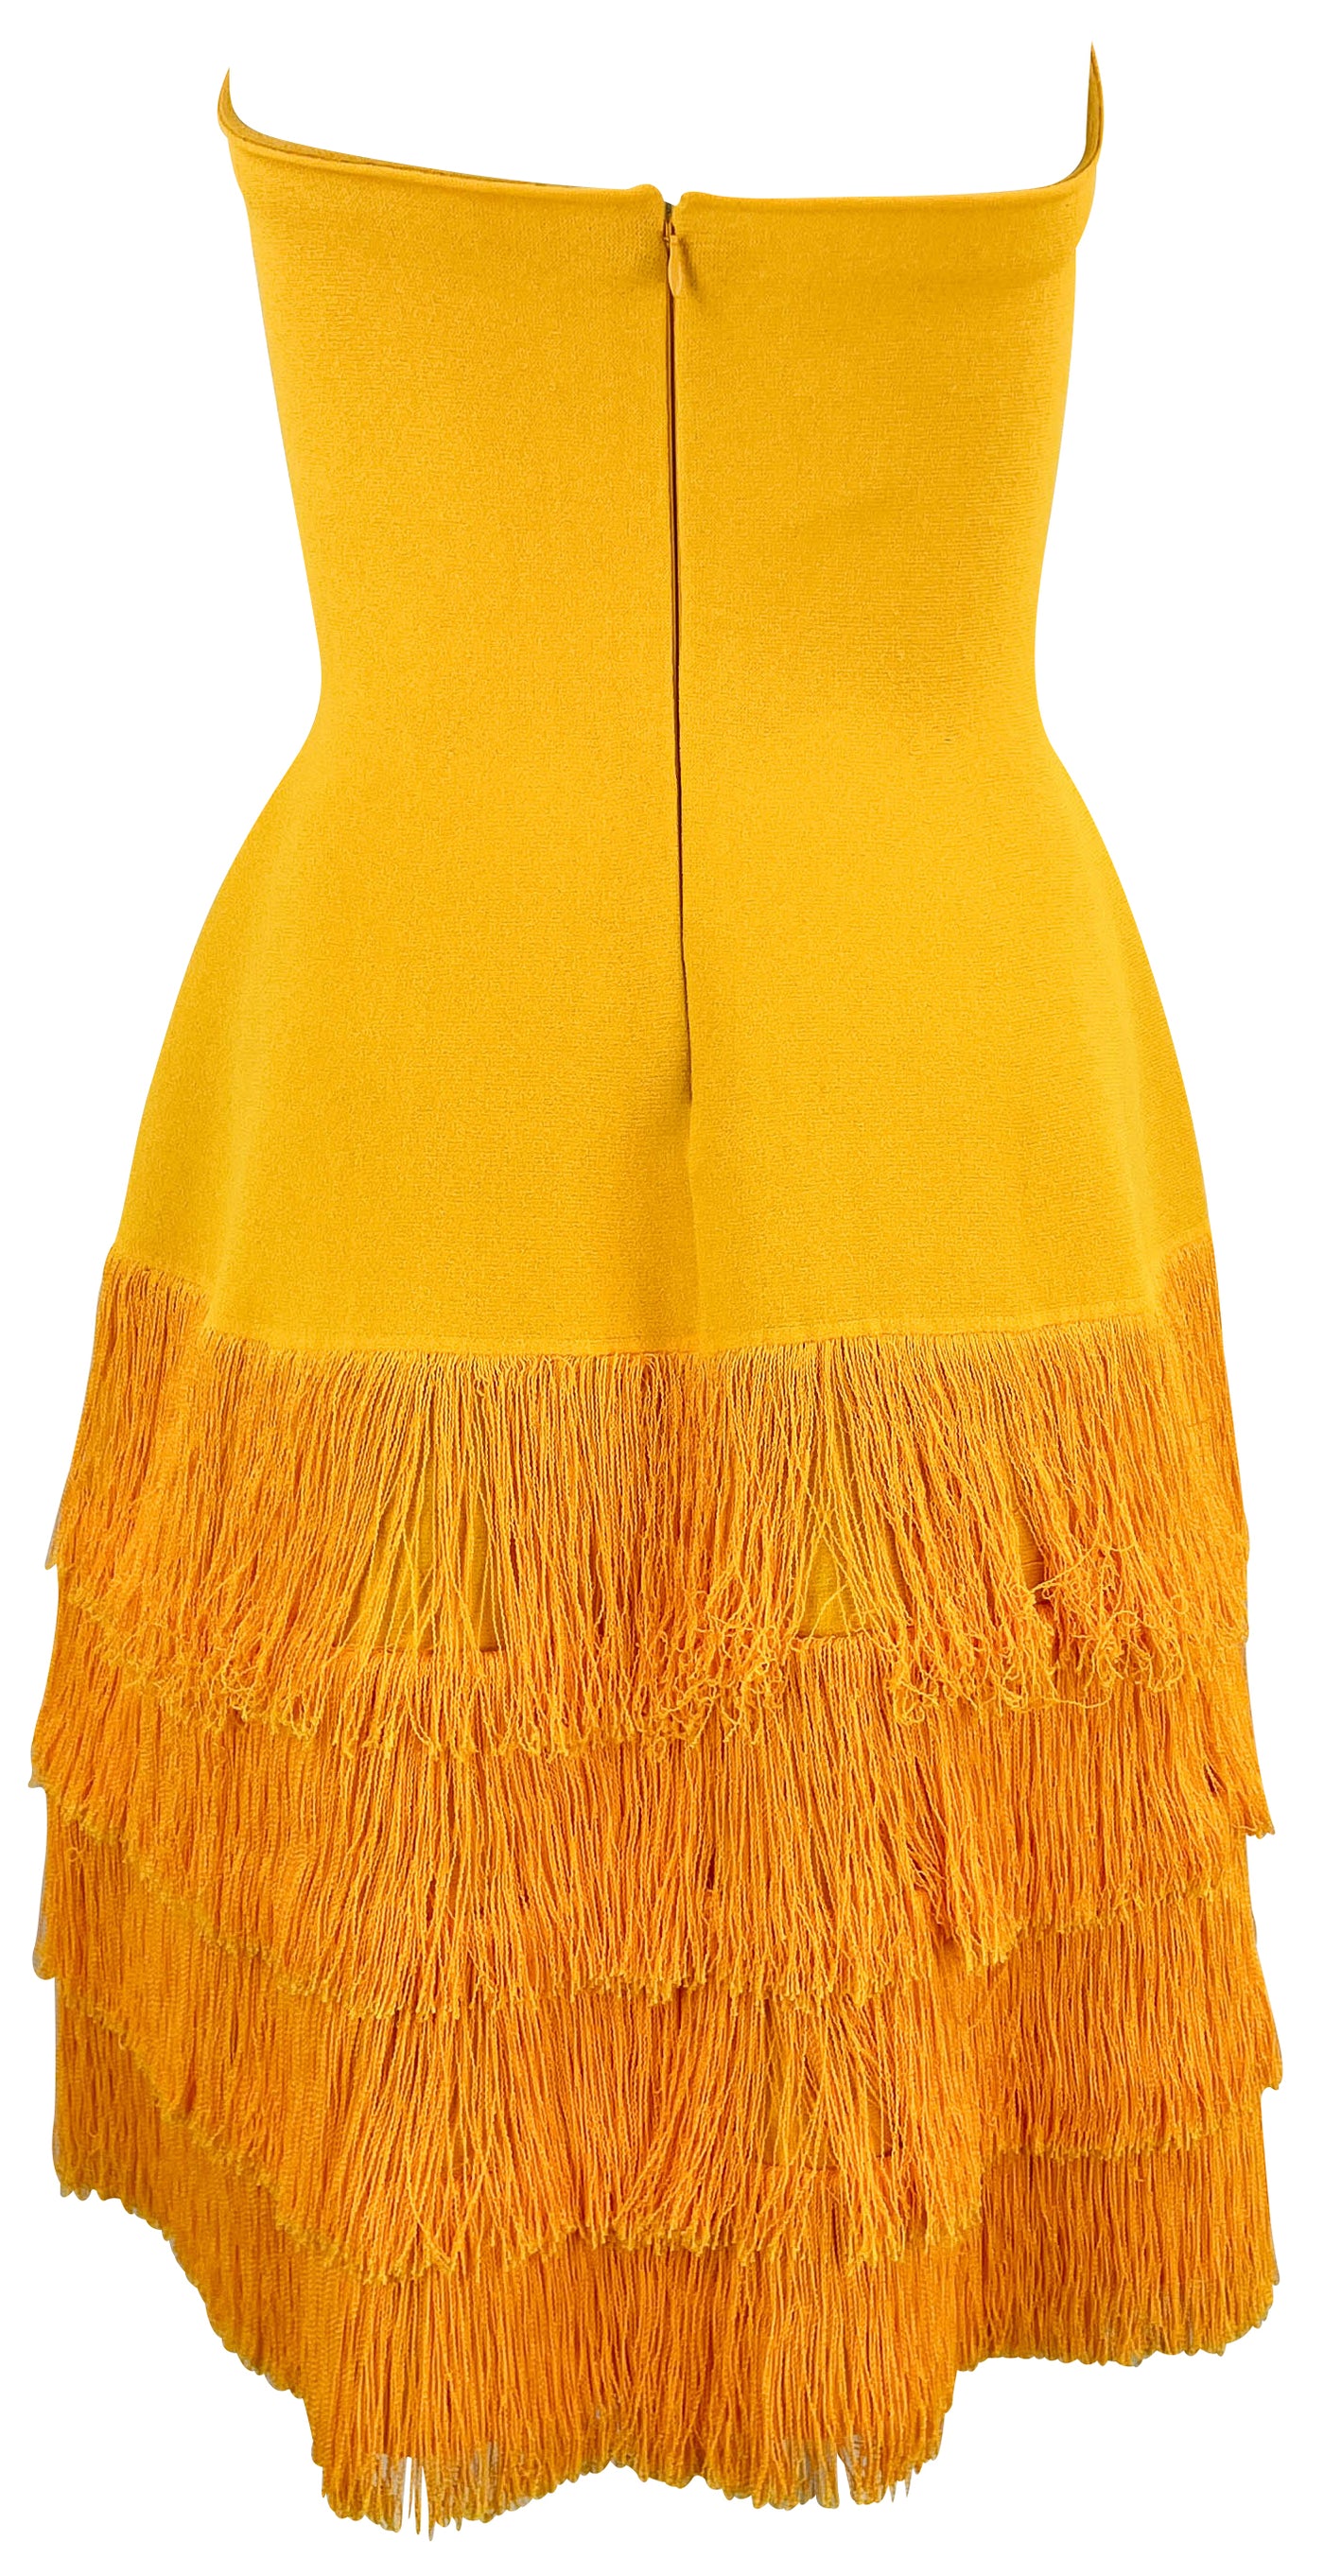 Proenza Schouler Sculpted Stretch Fringe Mini Dress in Golden Yellow - Discounts on Proenza Schouler at UAL